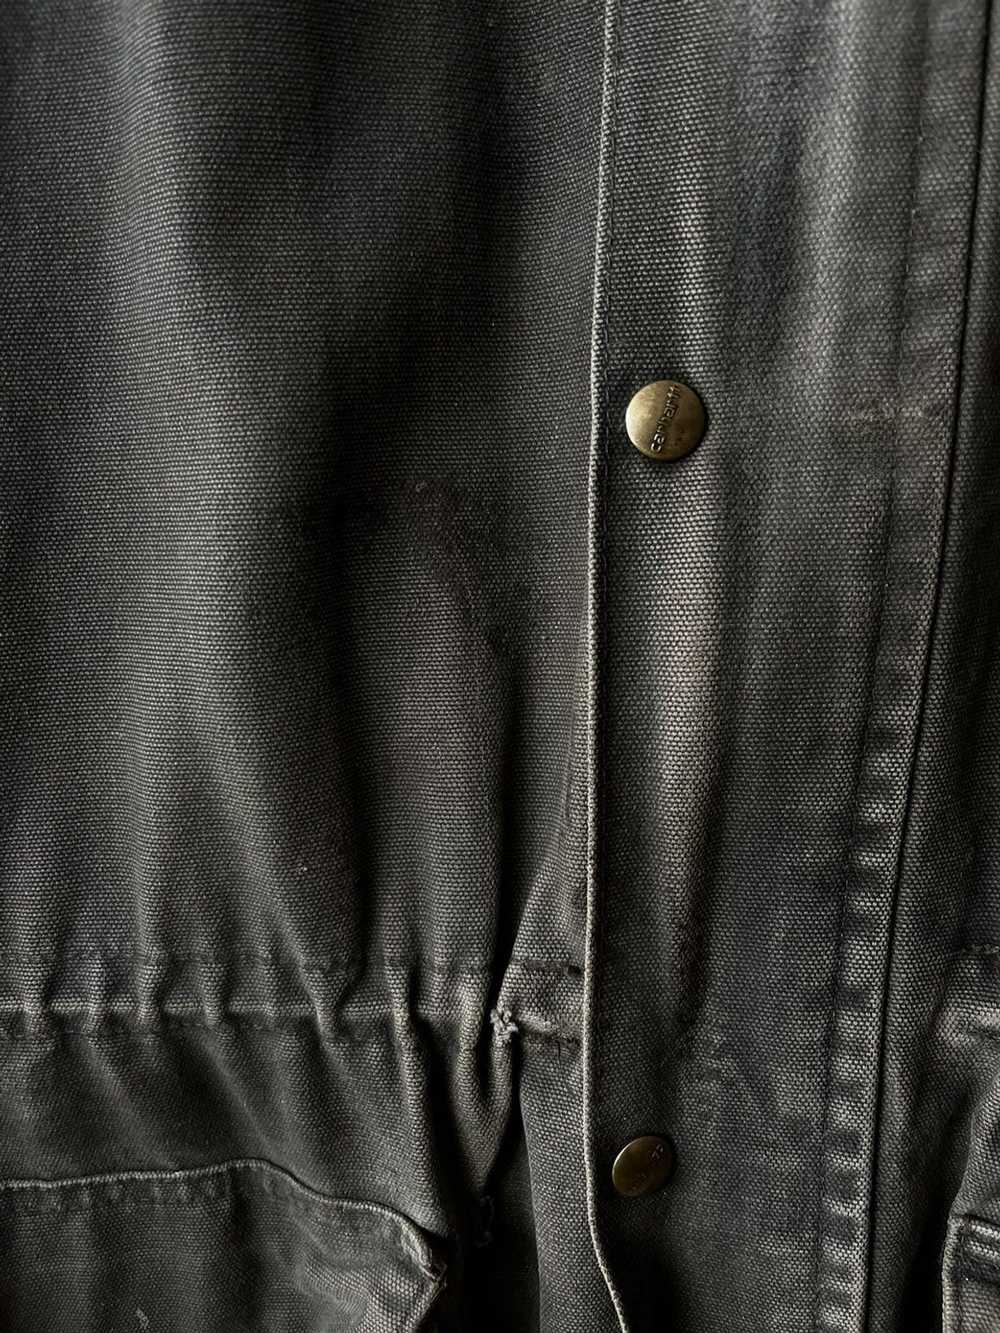 Carhartt × Vintage Carhart parka jacket - image 2